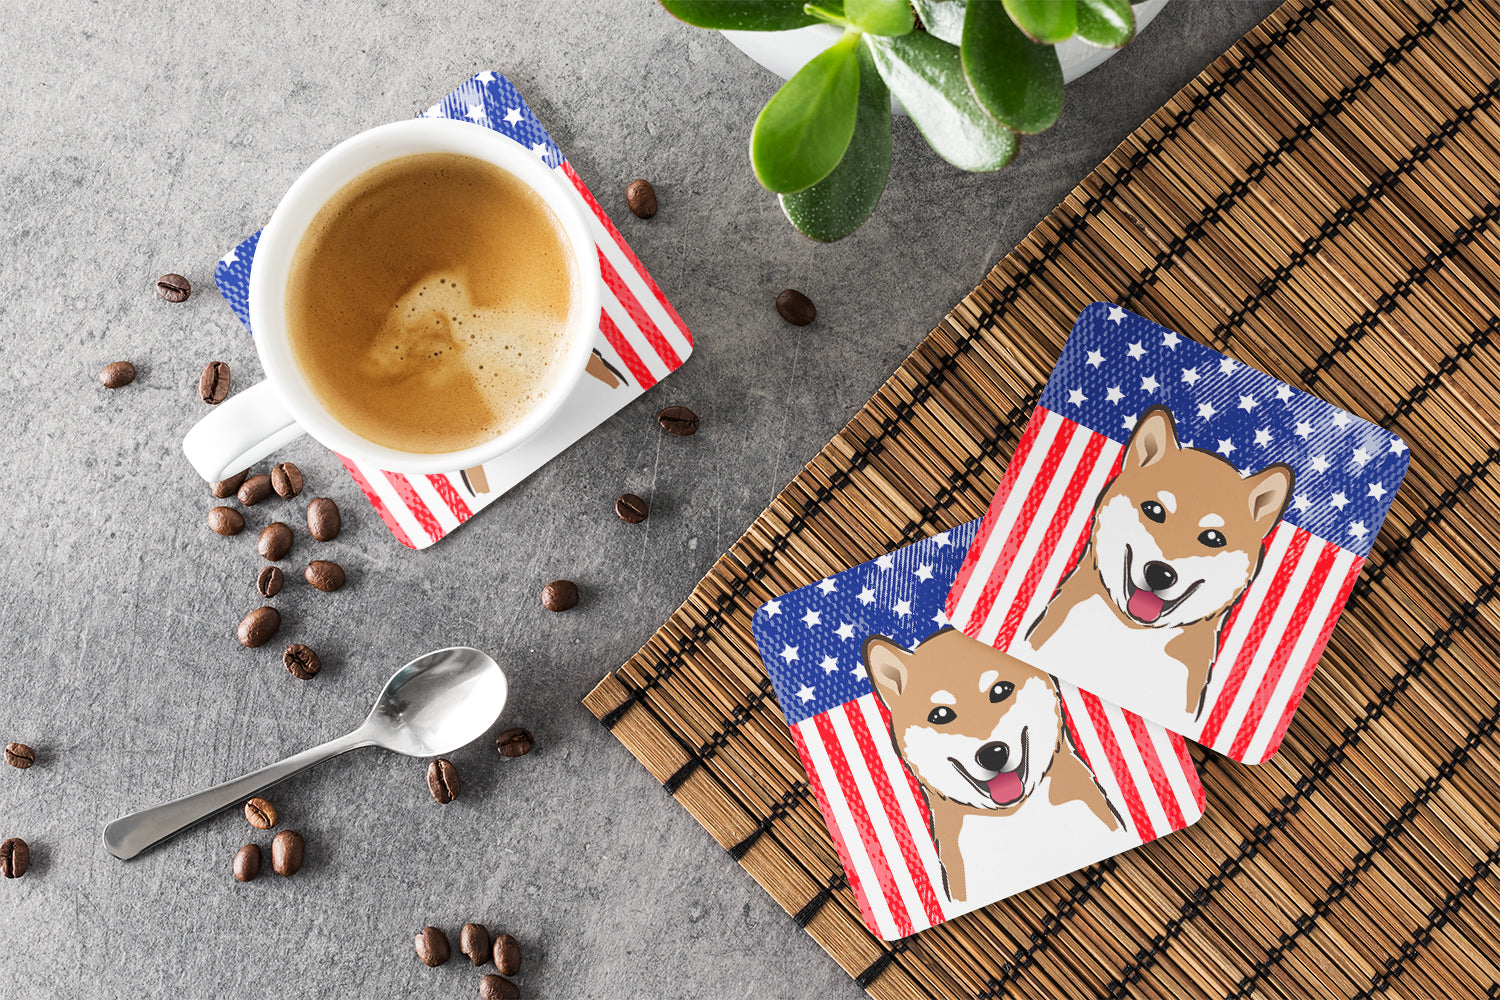 American Flag and Shiba Inu Foam Coaster Set of 4 - the-store.com